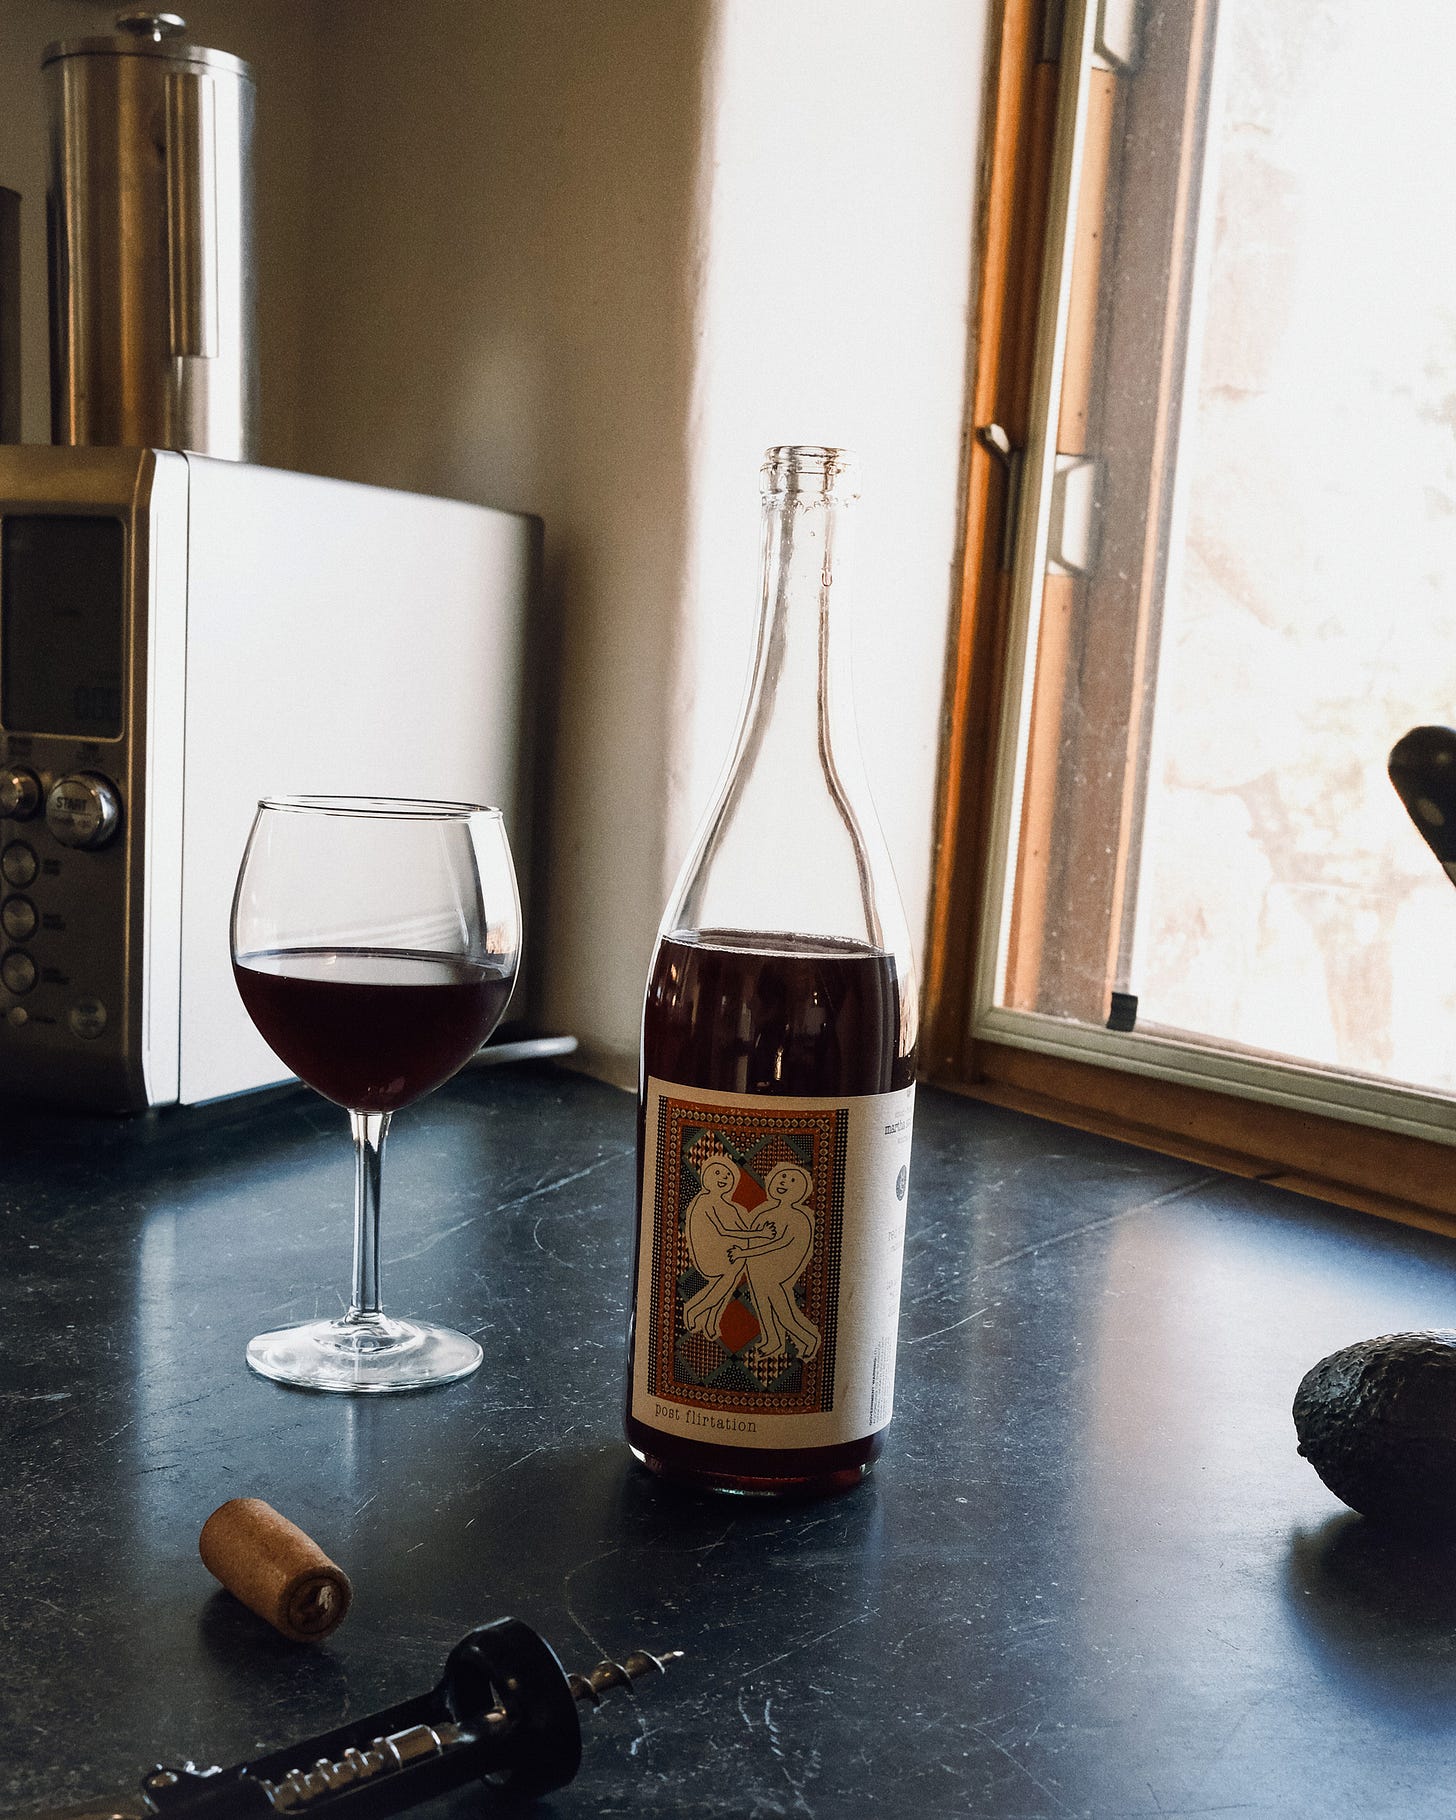 Bottle of open wine on counter